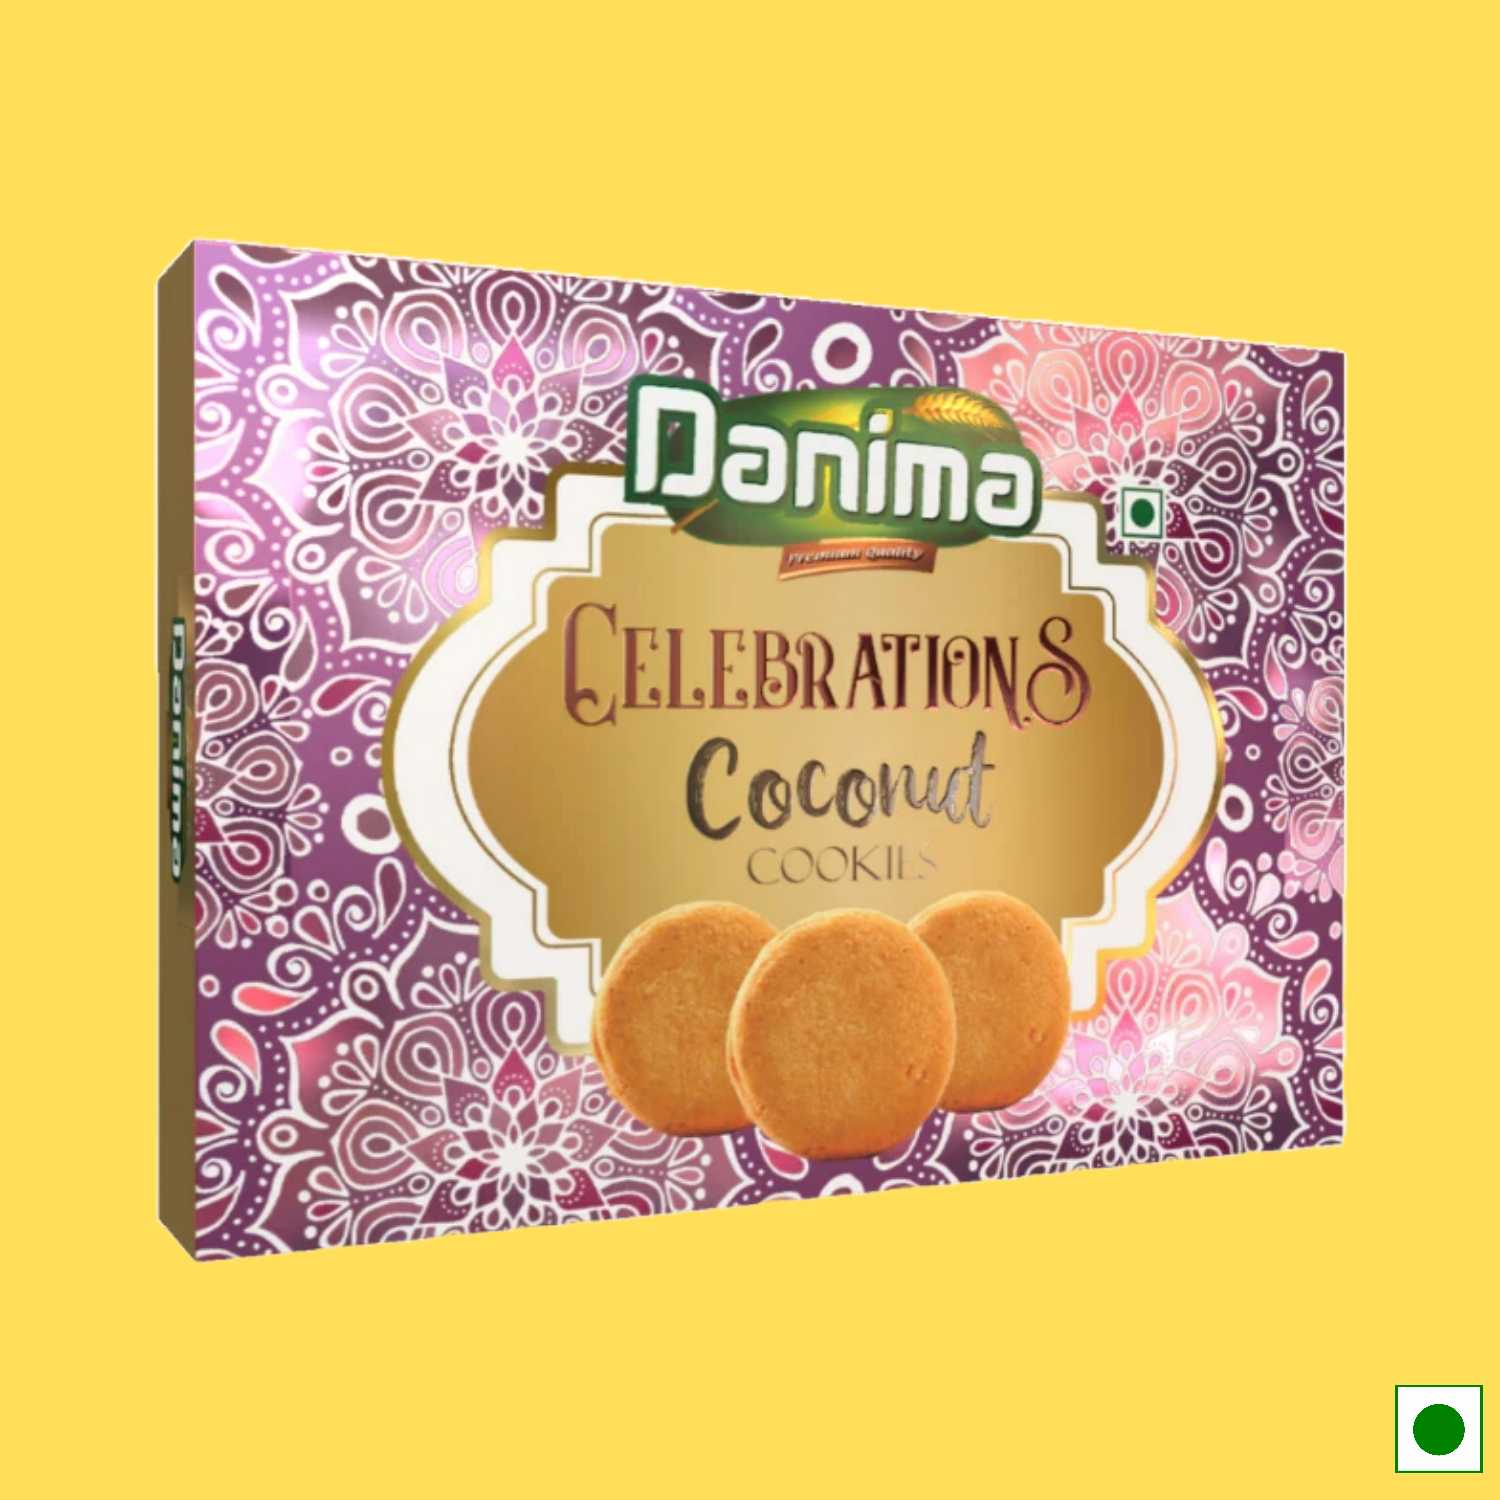 Danima Celebration Coconut Cookies, 300g